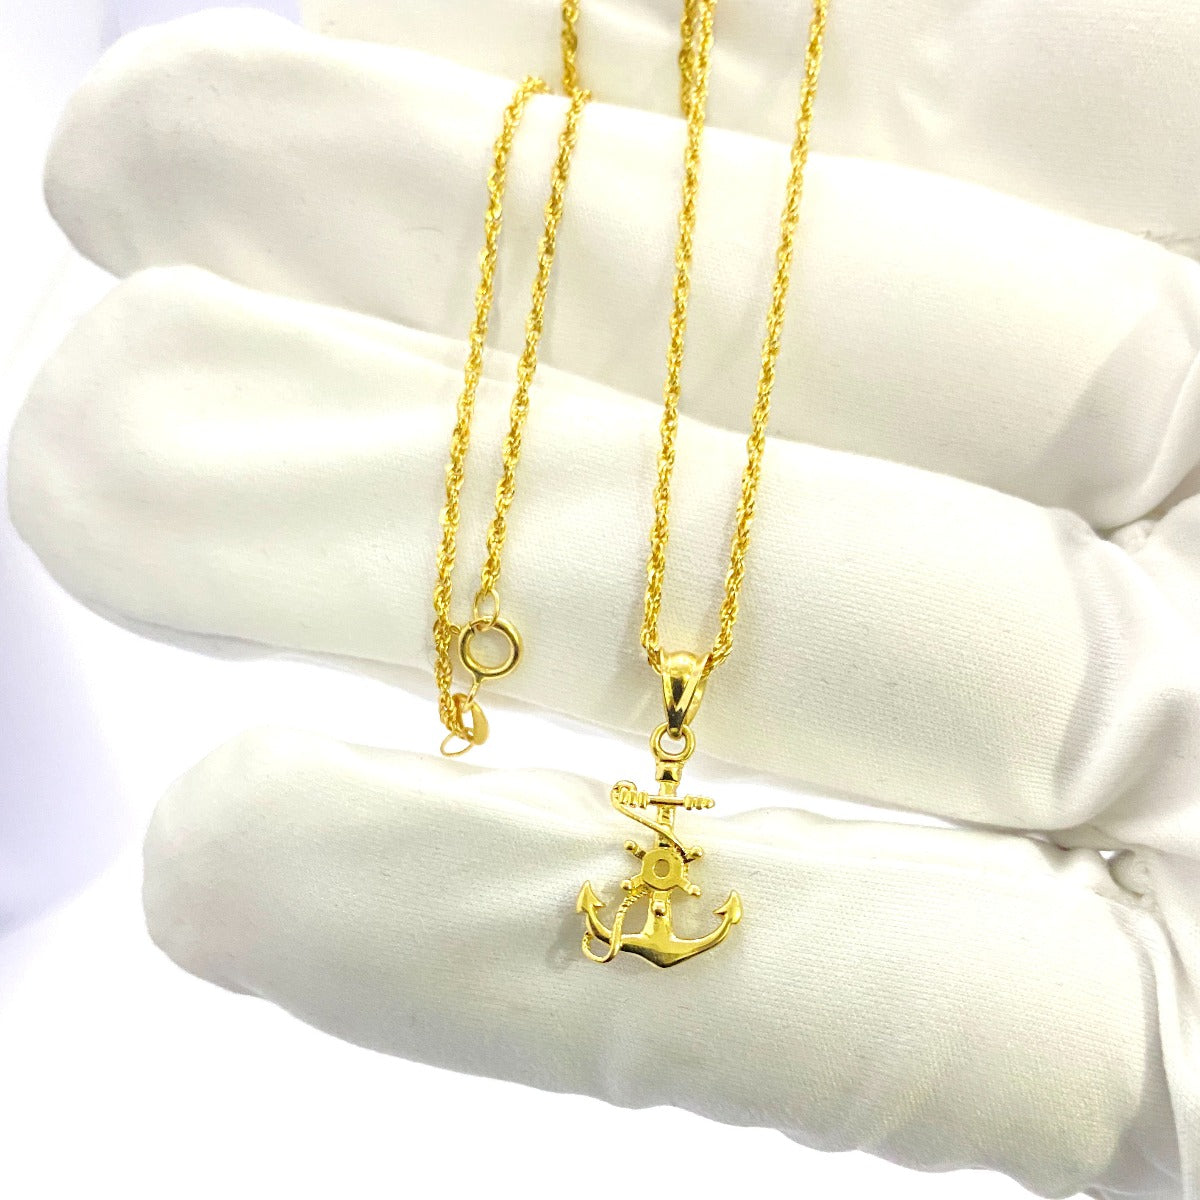 18K Pure Gold Anchor Pendant Necklace